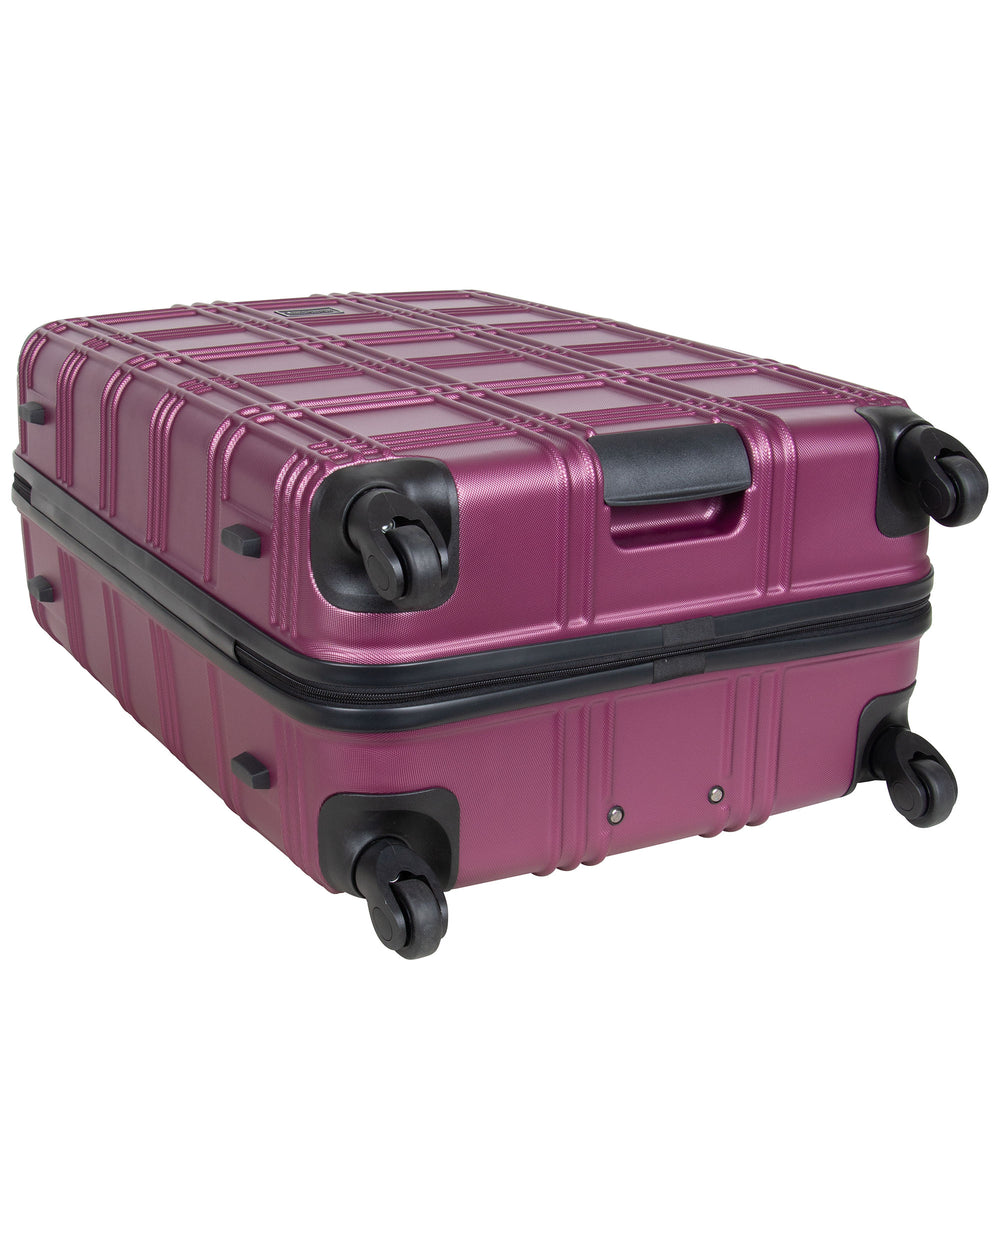 Nottingham 2-Piece Embossed Hardside Luggage Set - Raspberry